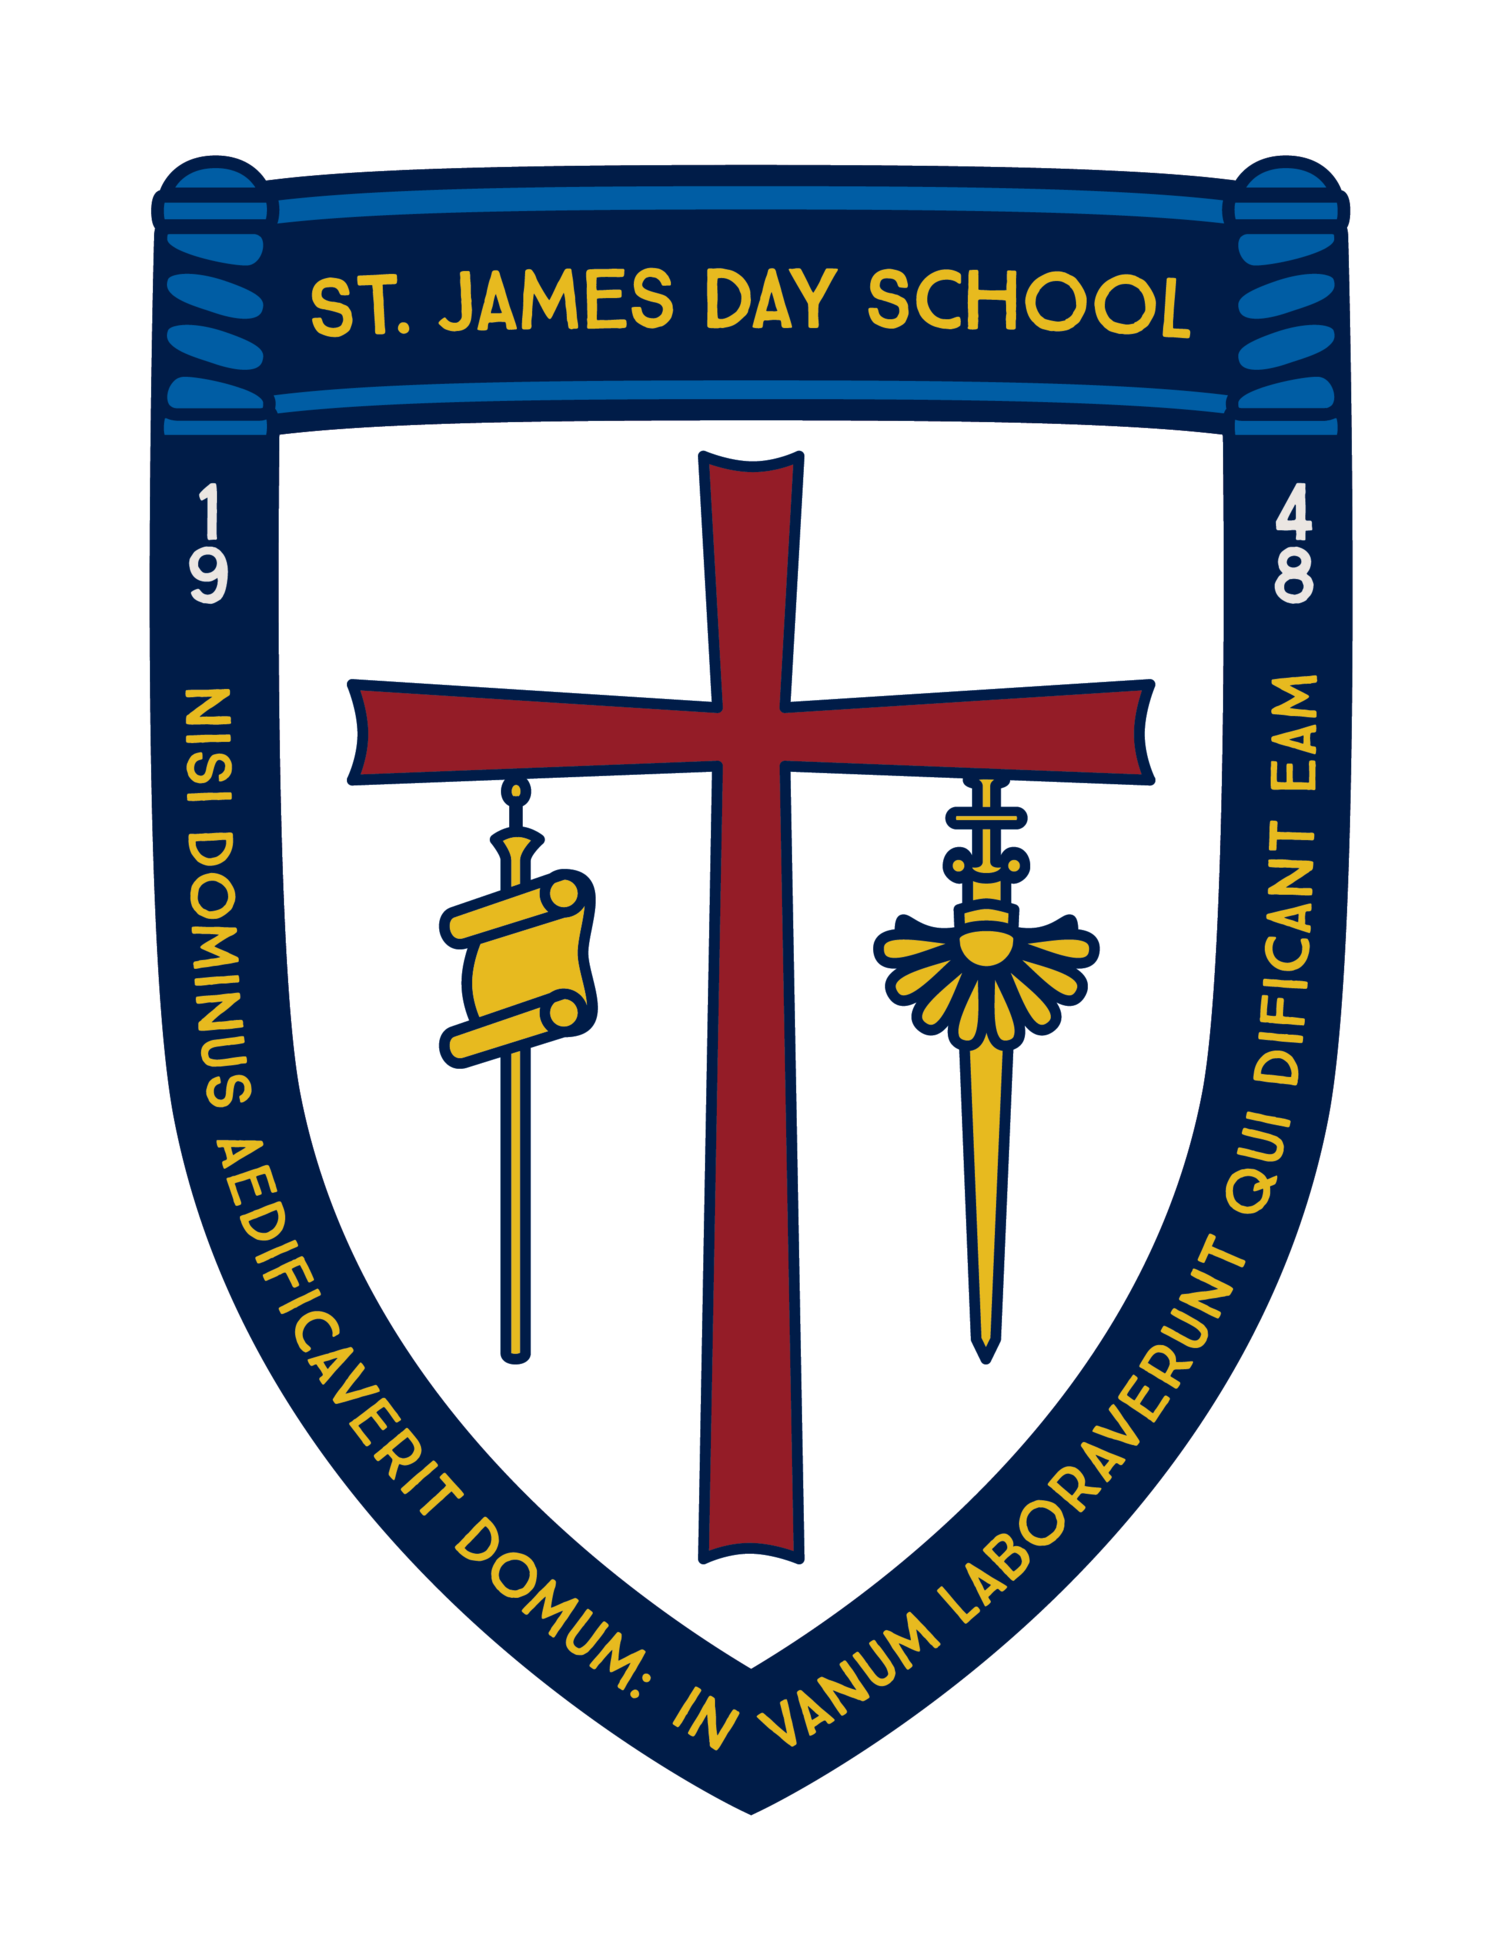 St. James Day School